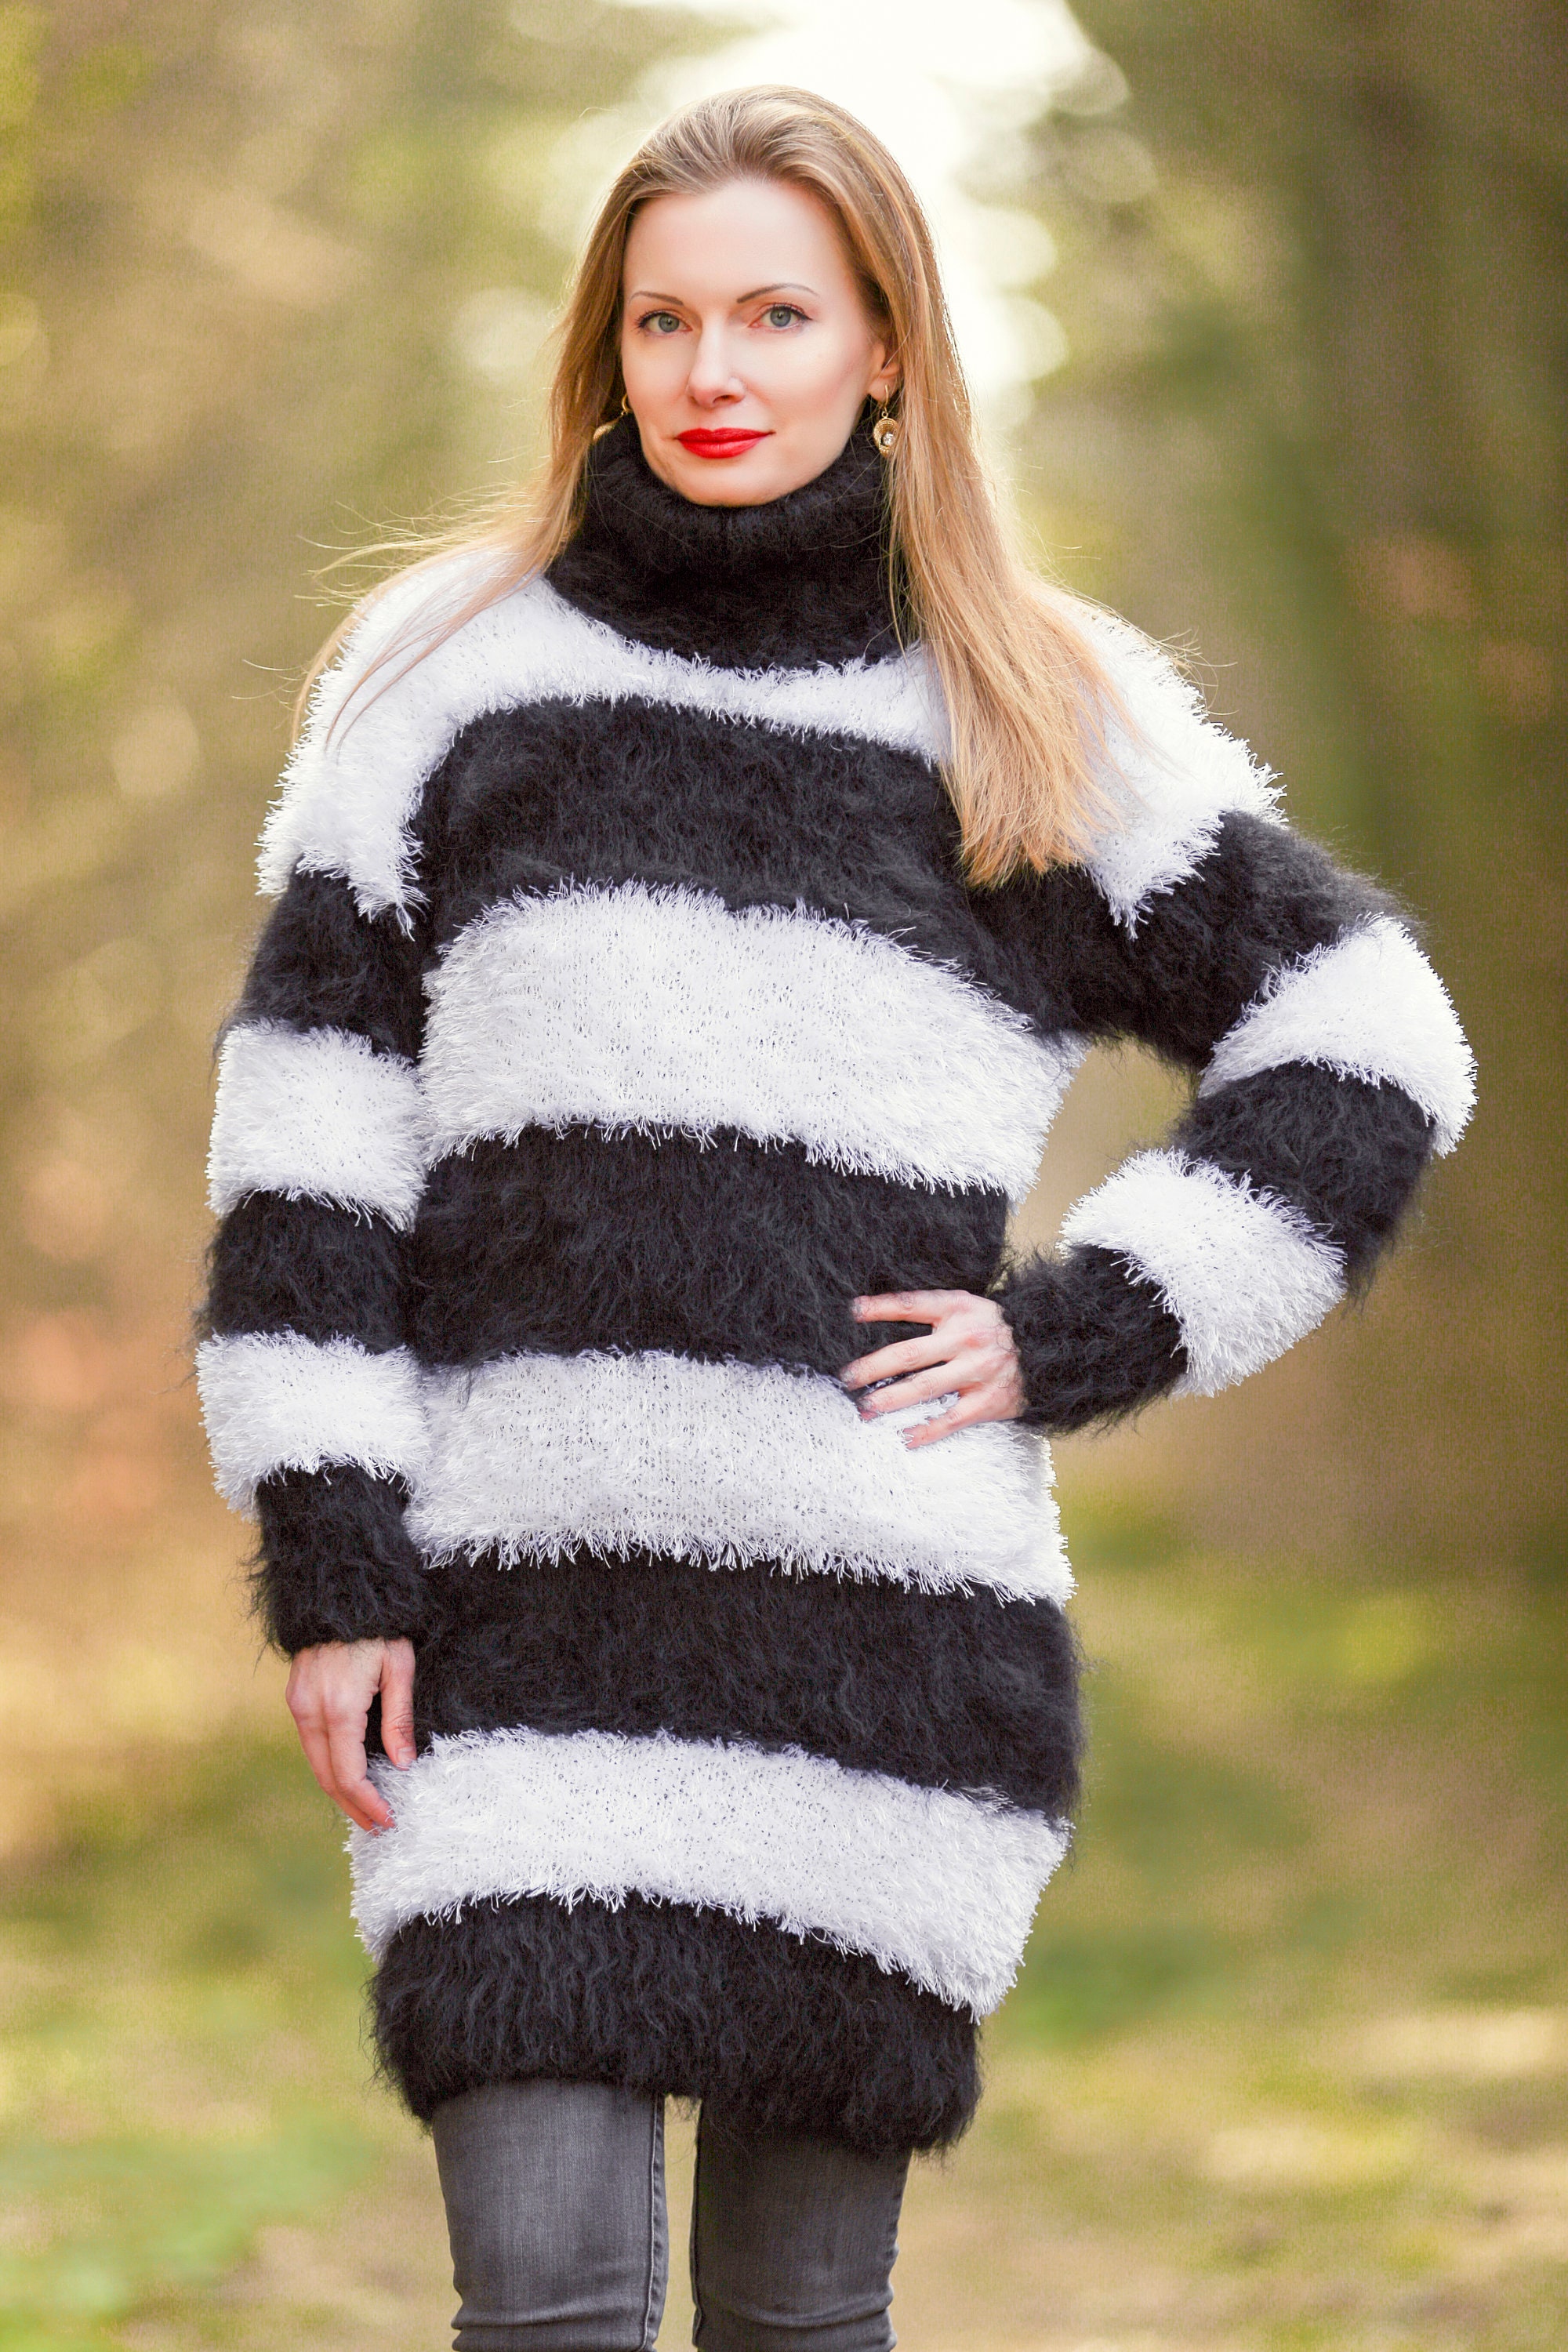 Fuzzy Mohair Decofur Sweater Black White Stripes Jumper by | Etsy